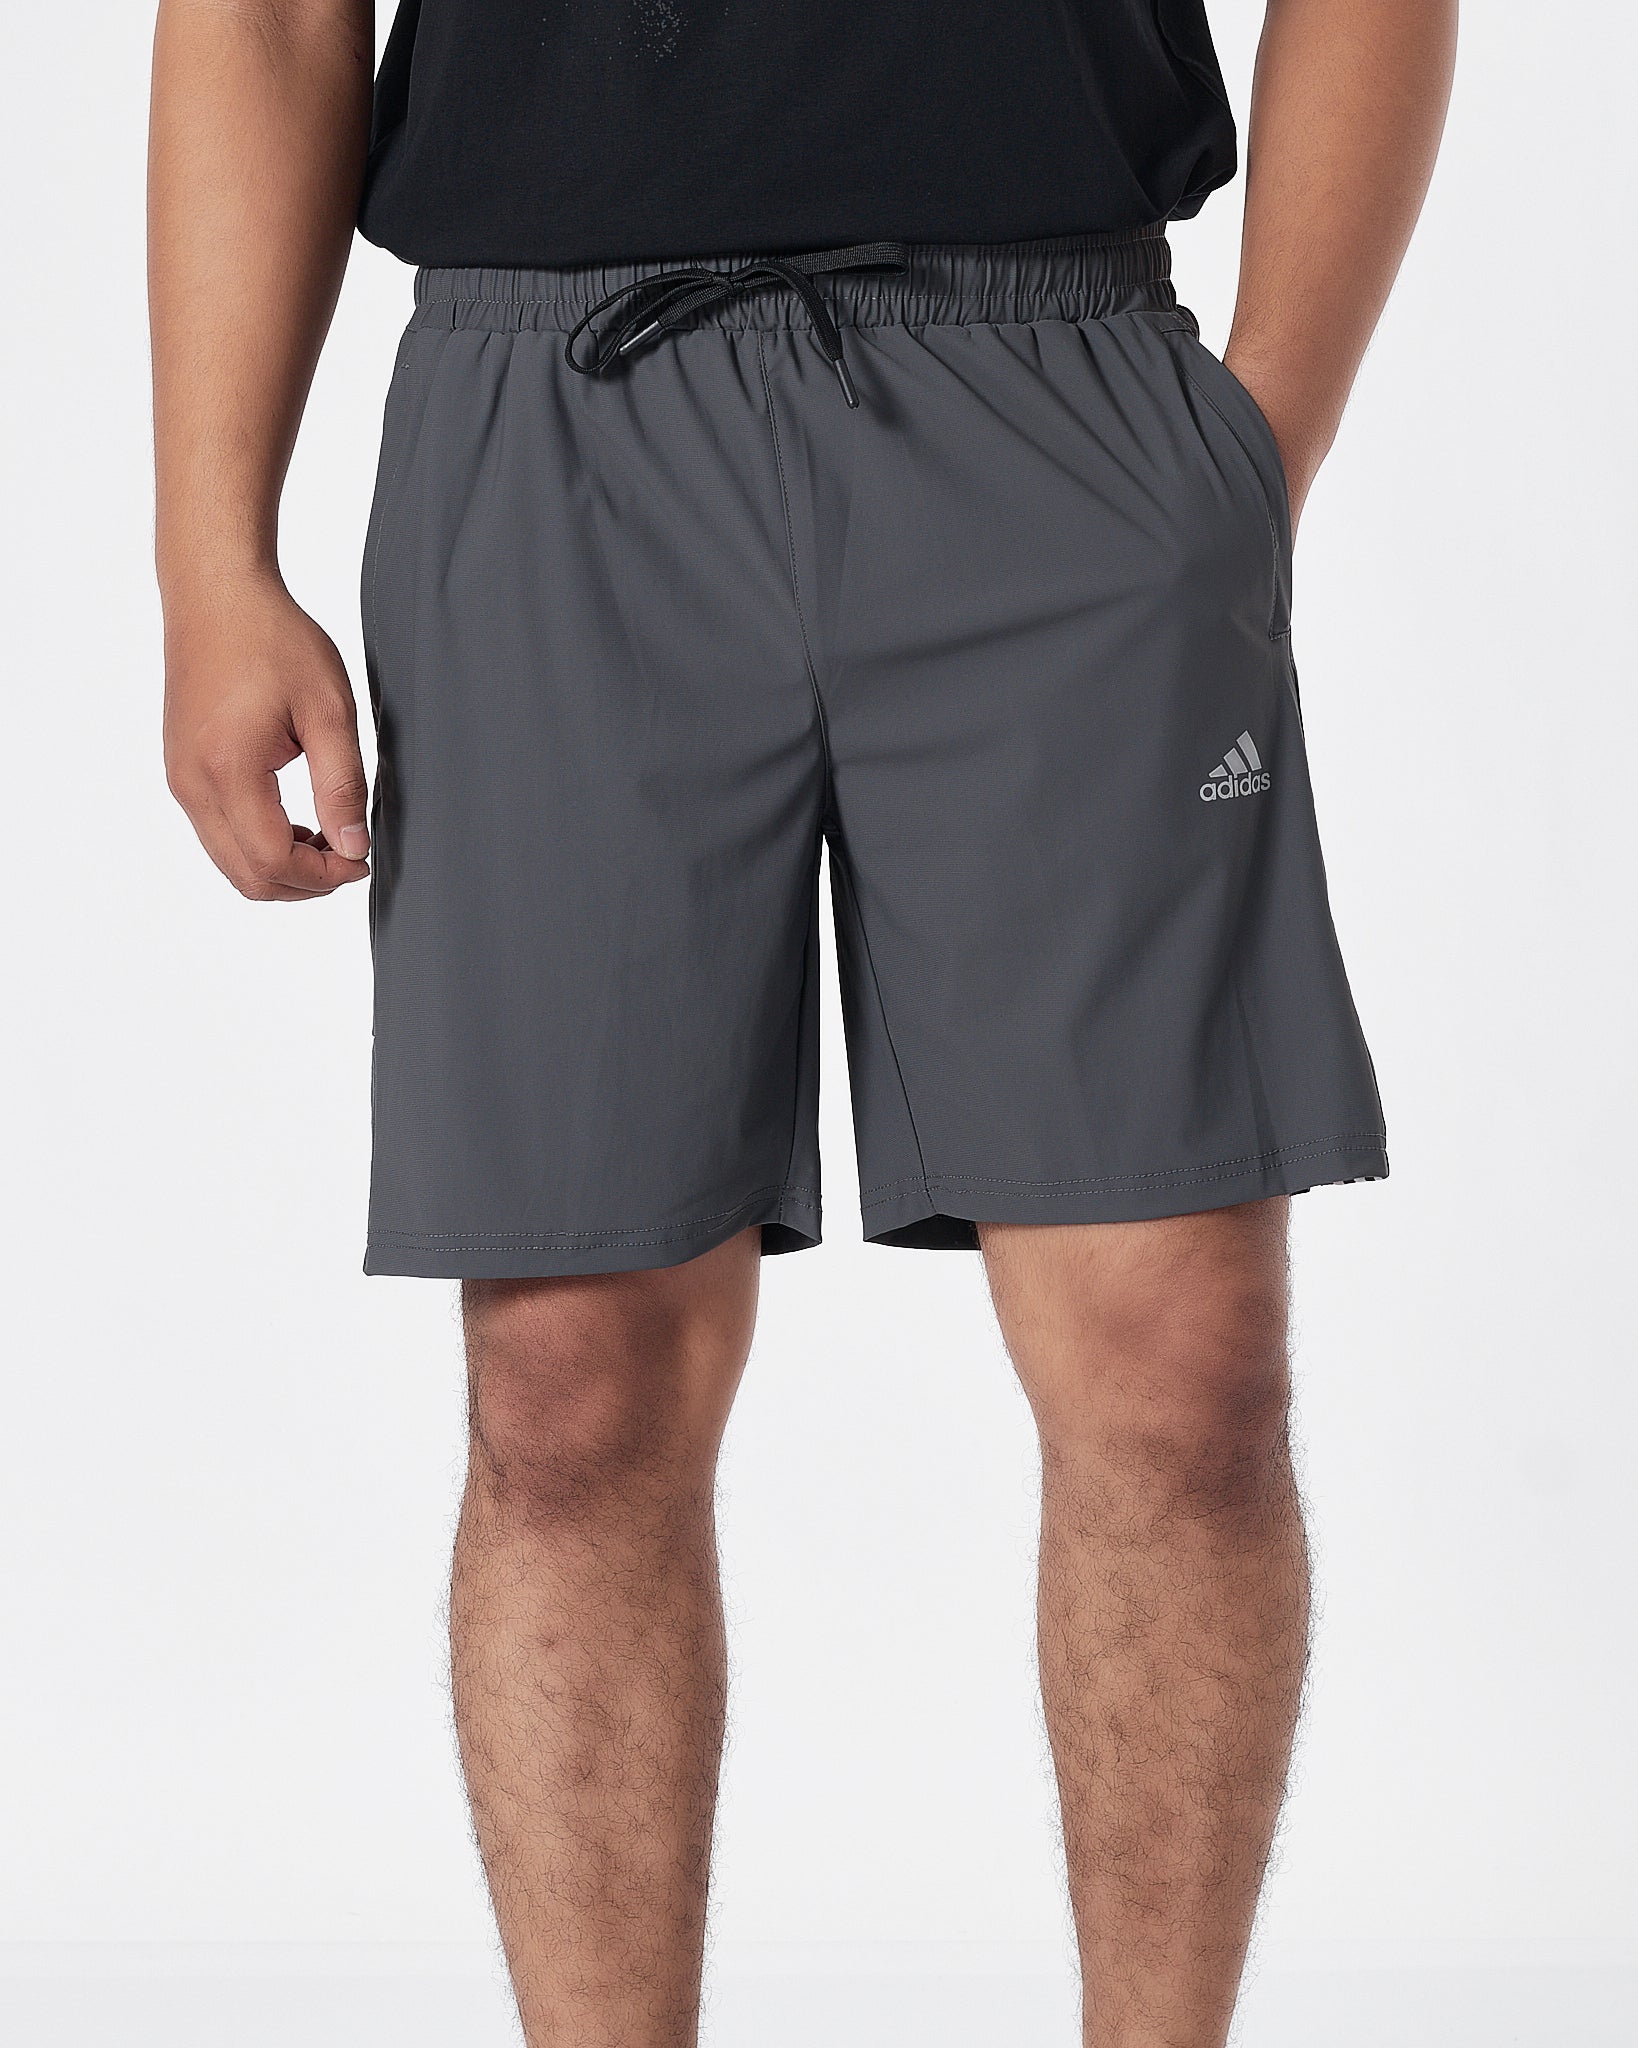 ADI Logo Printed Men Grey Track Shorts 13.50